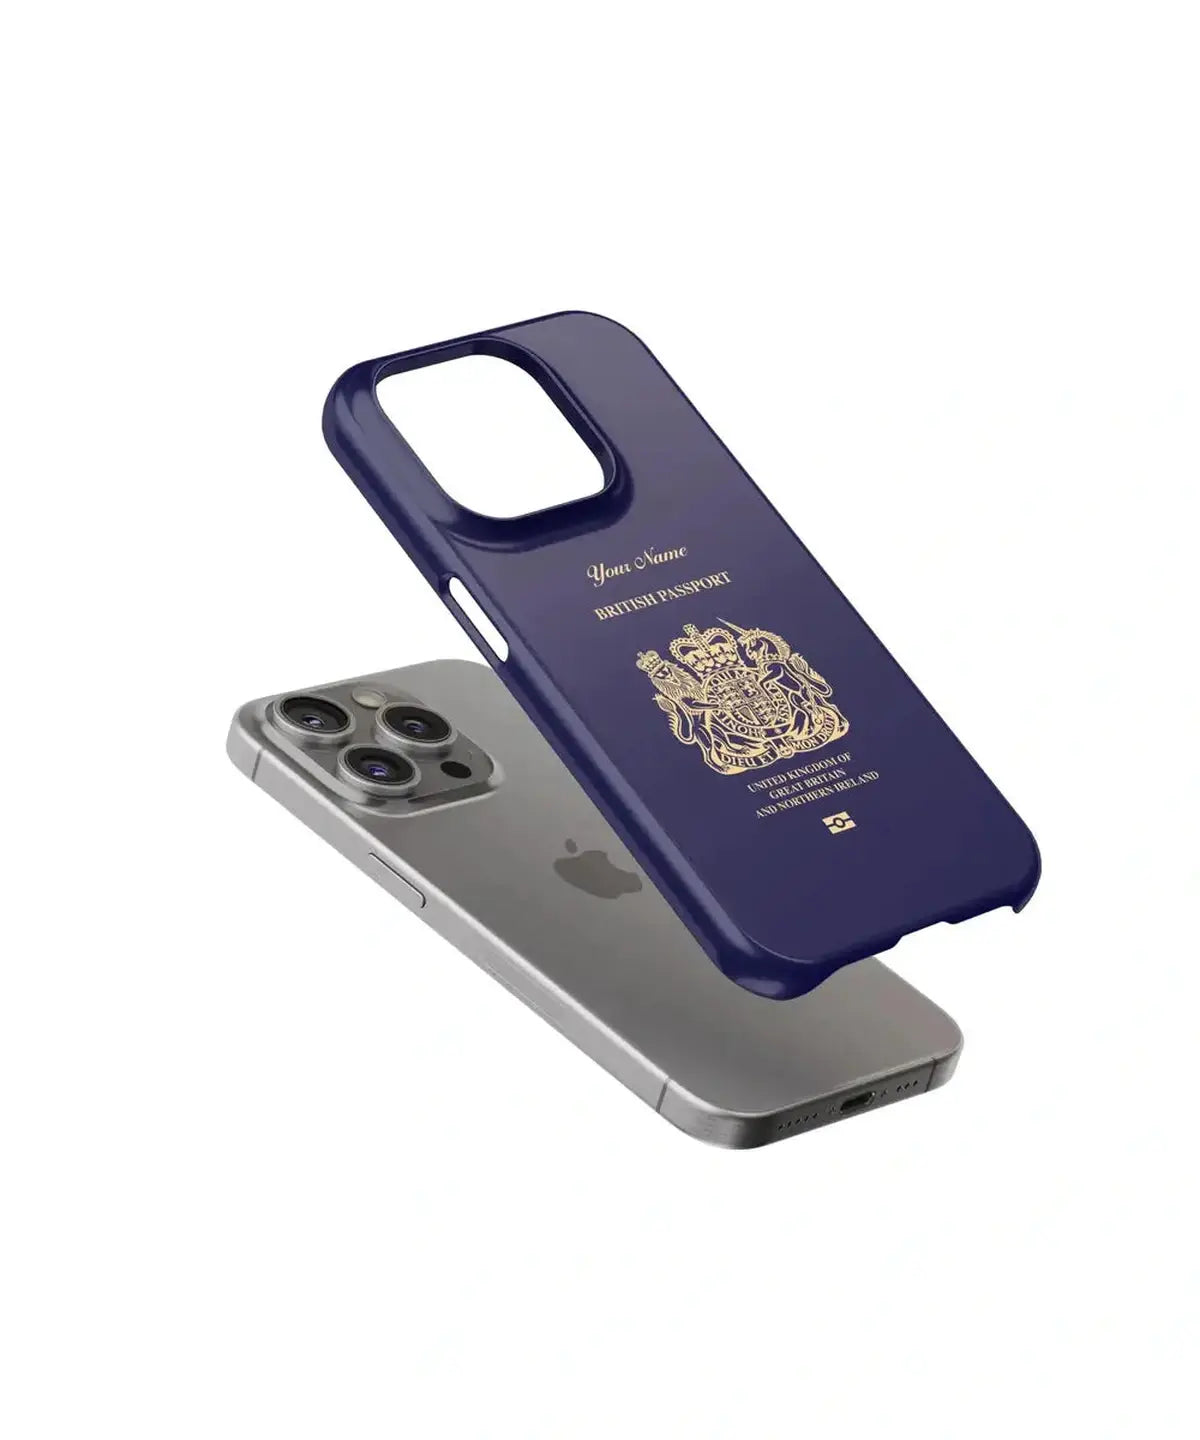 United Kingdom Passport - iPhone Though Case Slim Case